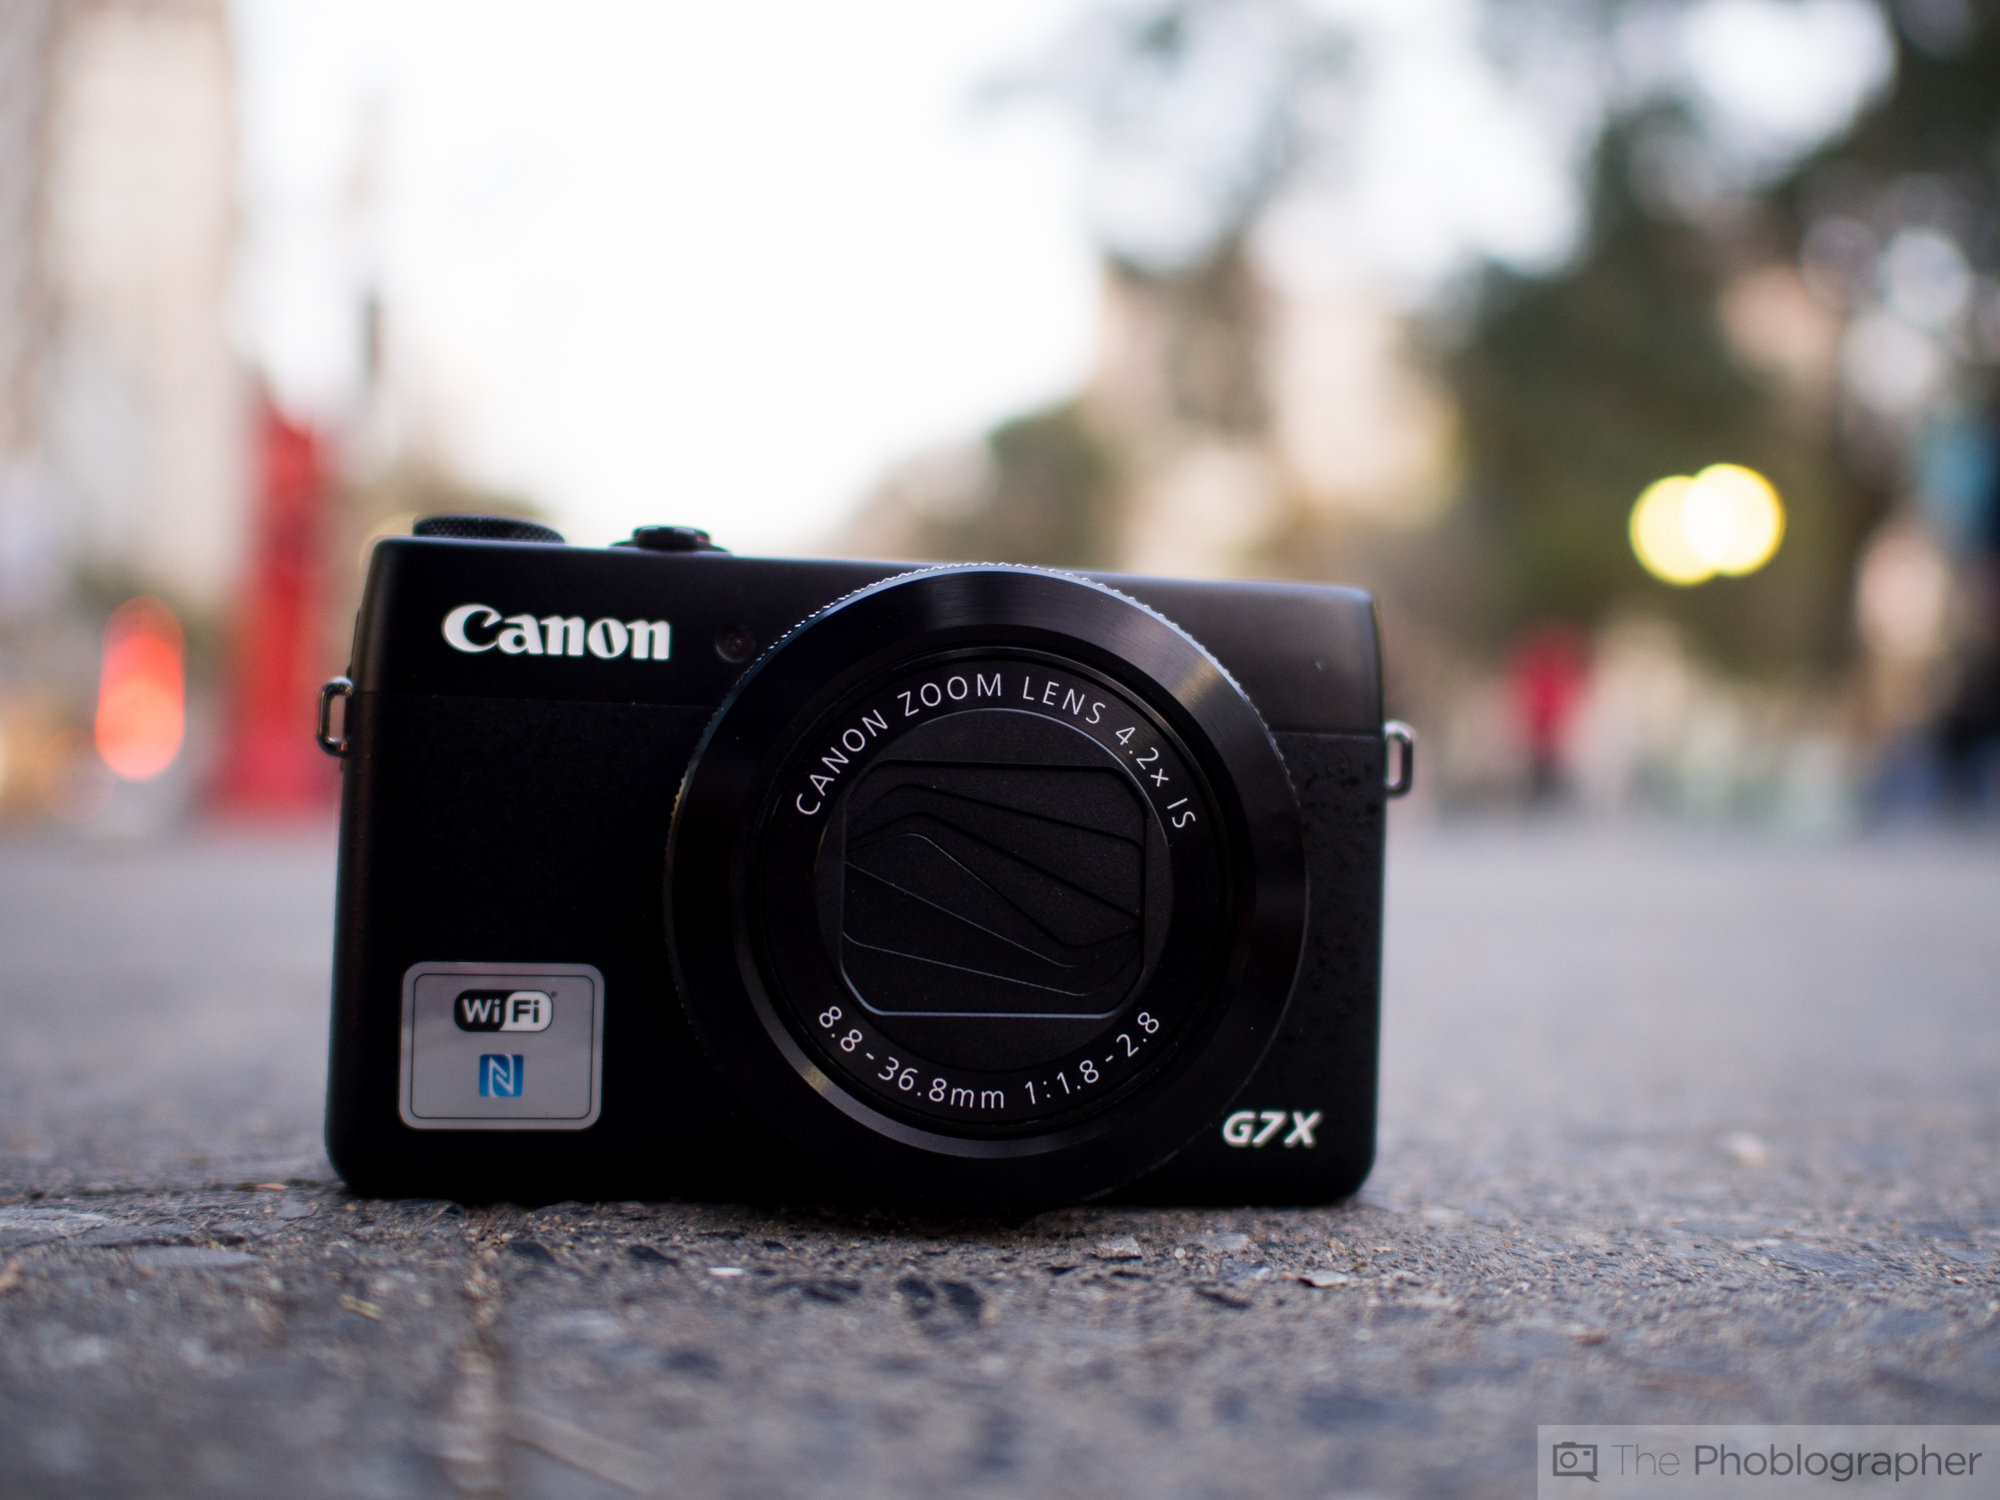 Canon PowerShot G7 X Digital Camera - Wi-Fi Enabled